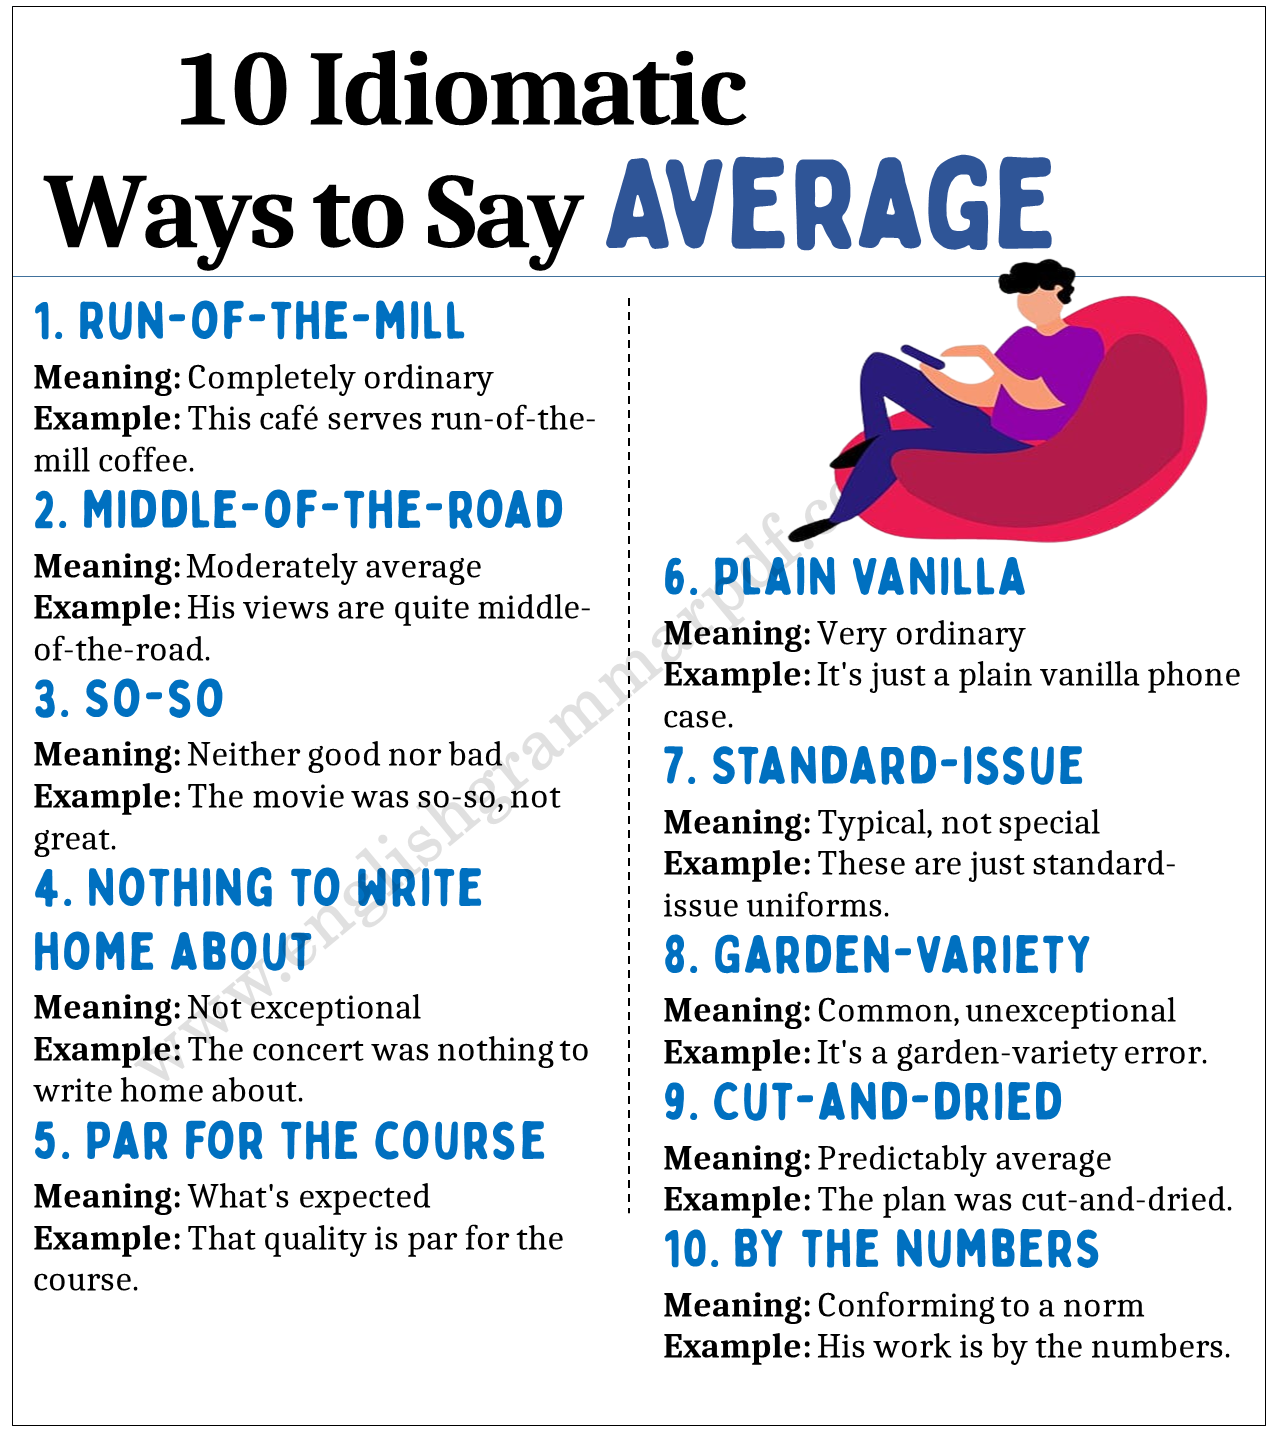 idiomatic ways to say average